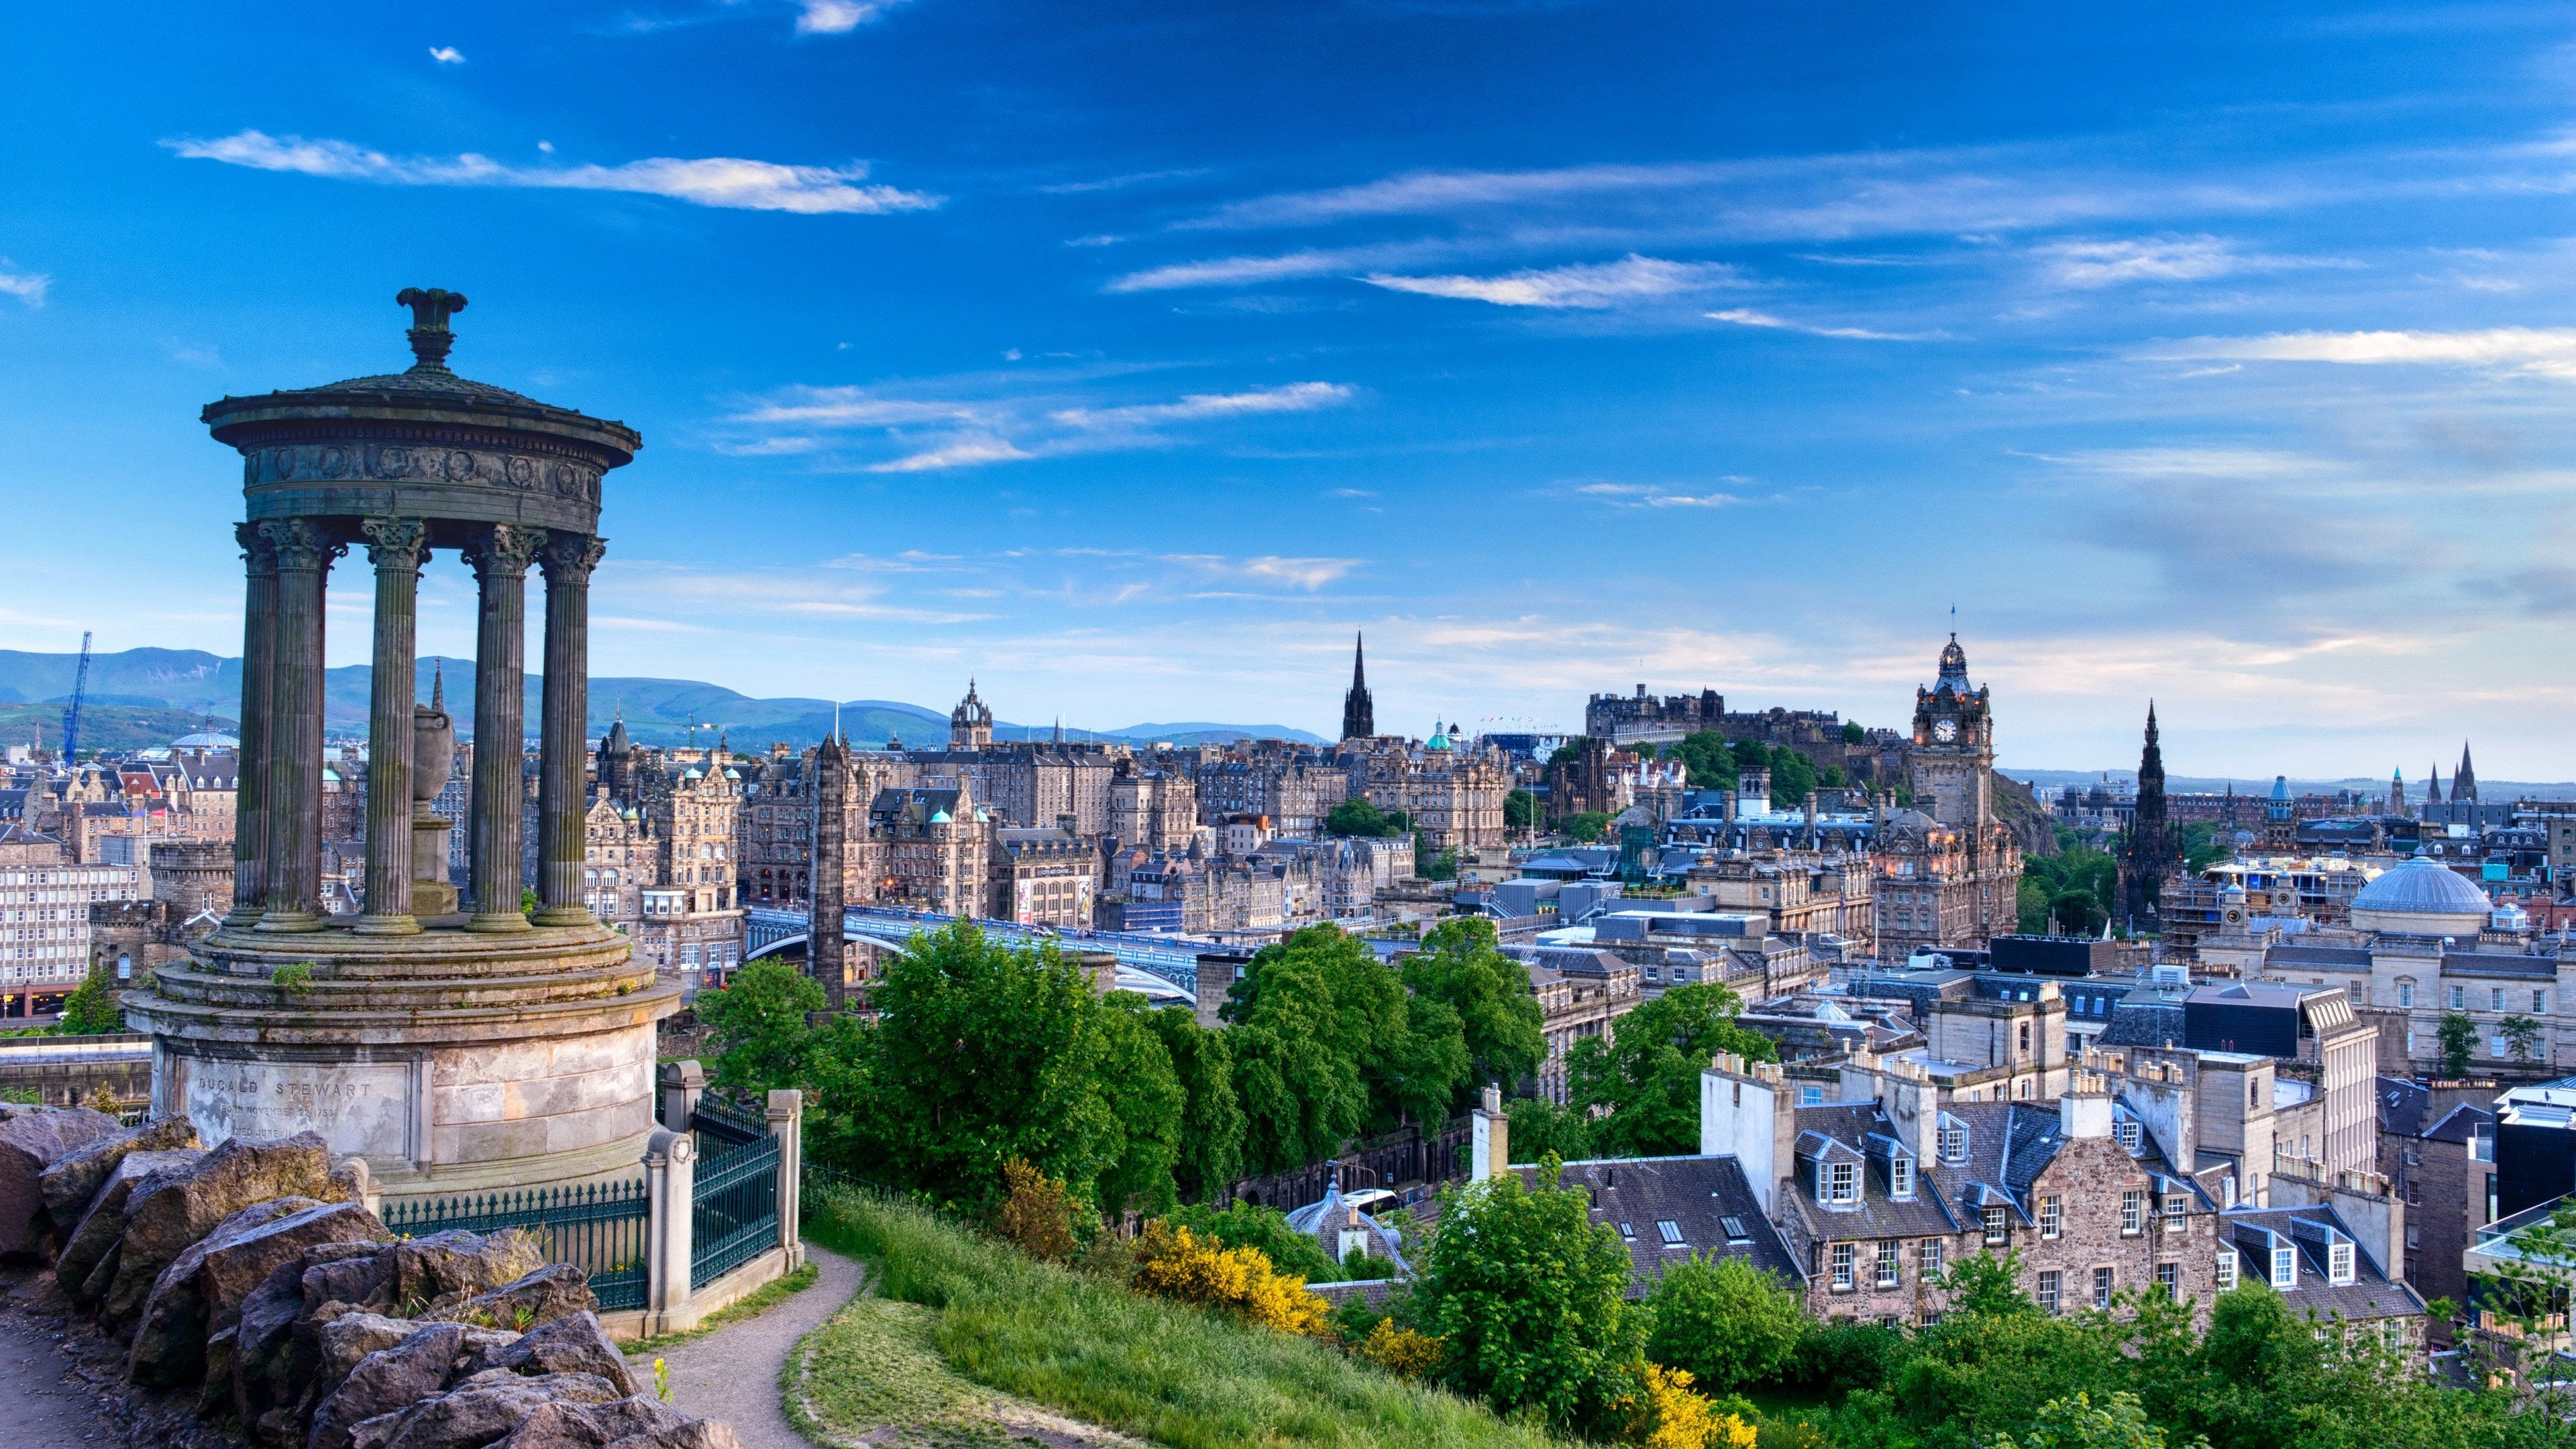 Edinburgh desktop wallpapers, Top free backgrounds, Stunning cityscapes, 3840x2160 4K Desktop